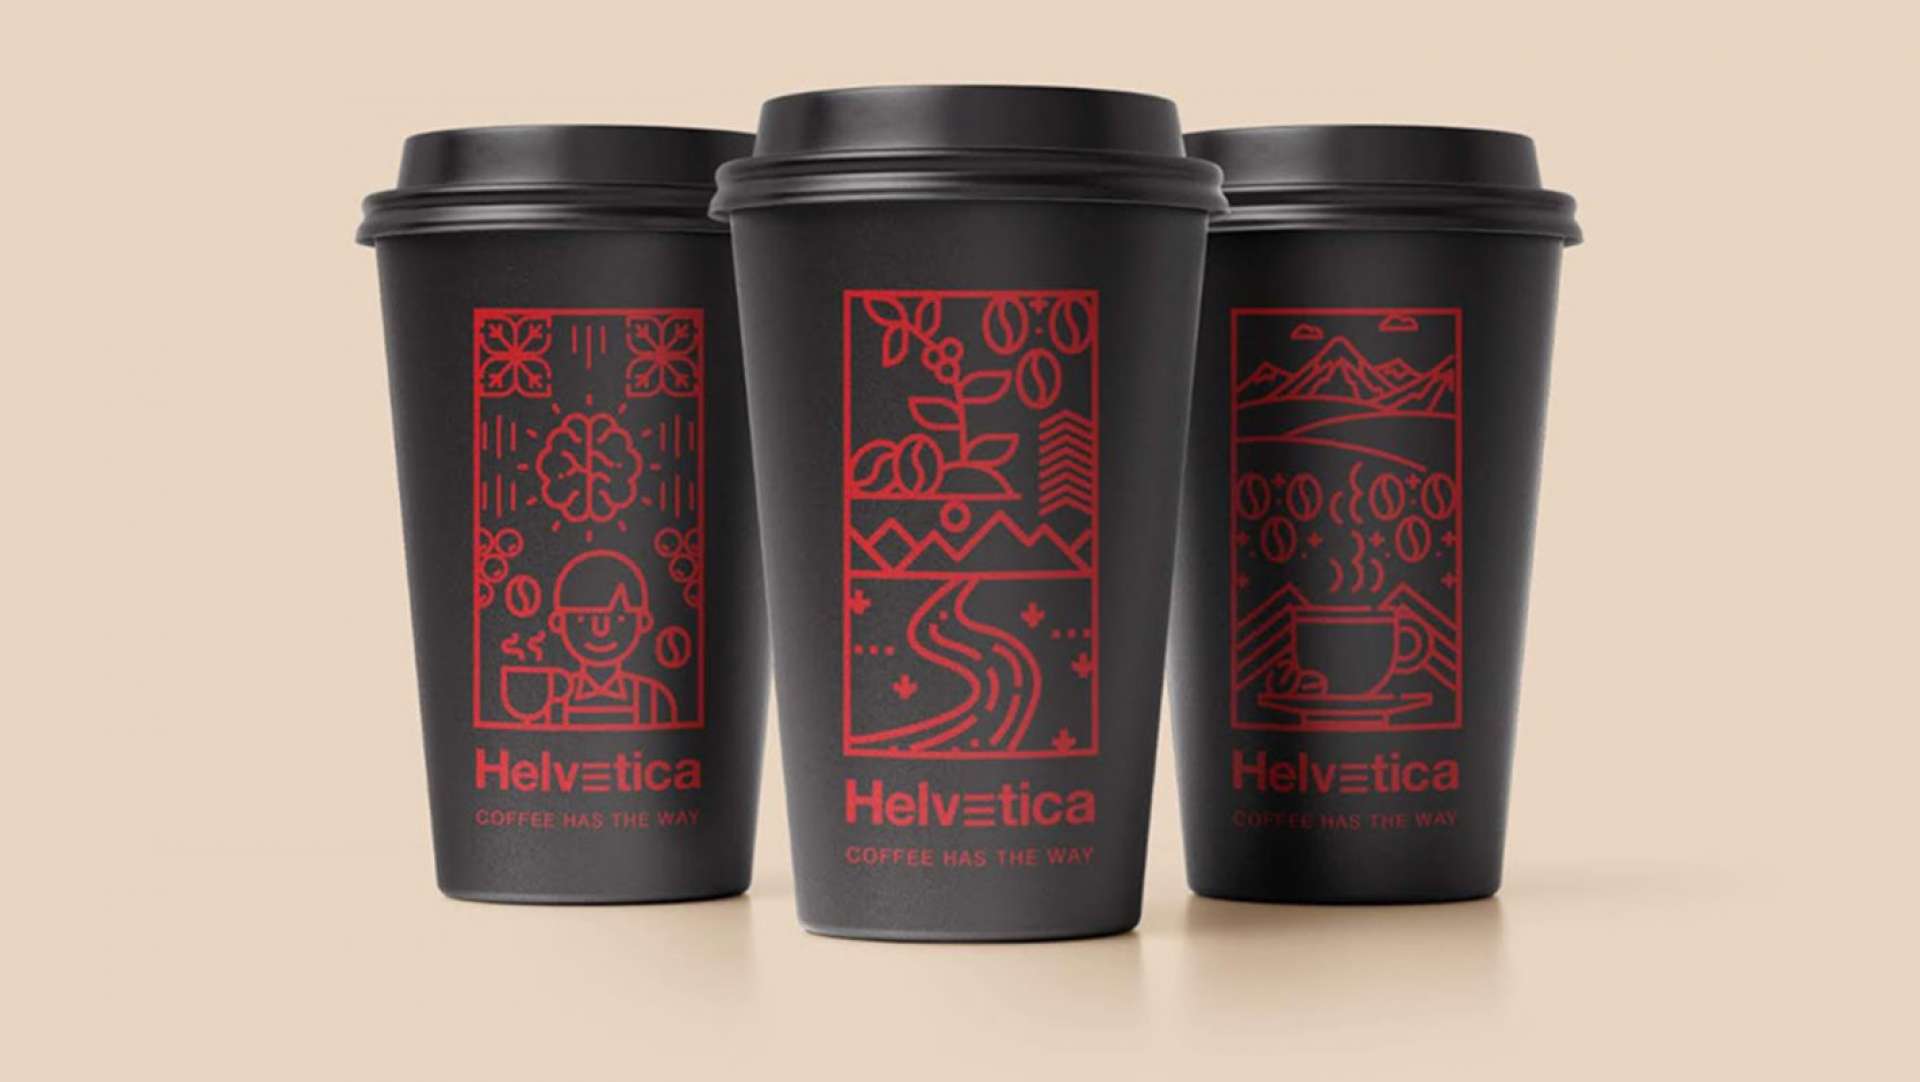 Helvetica Coffee by Widarto Impact